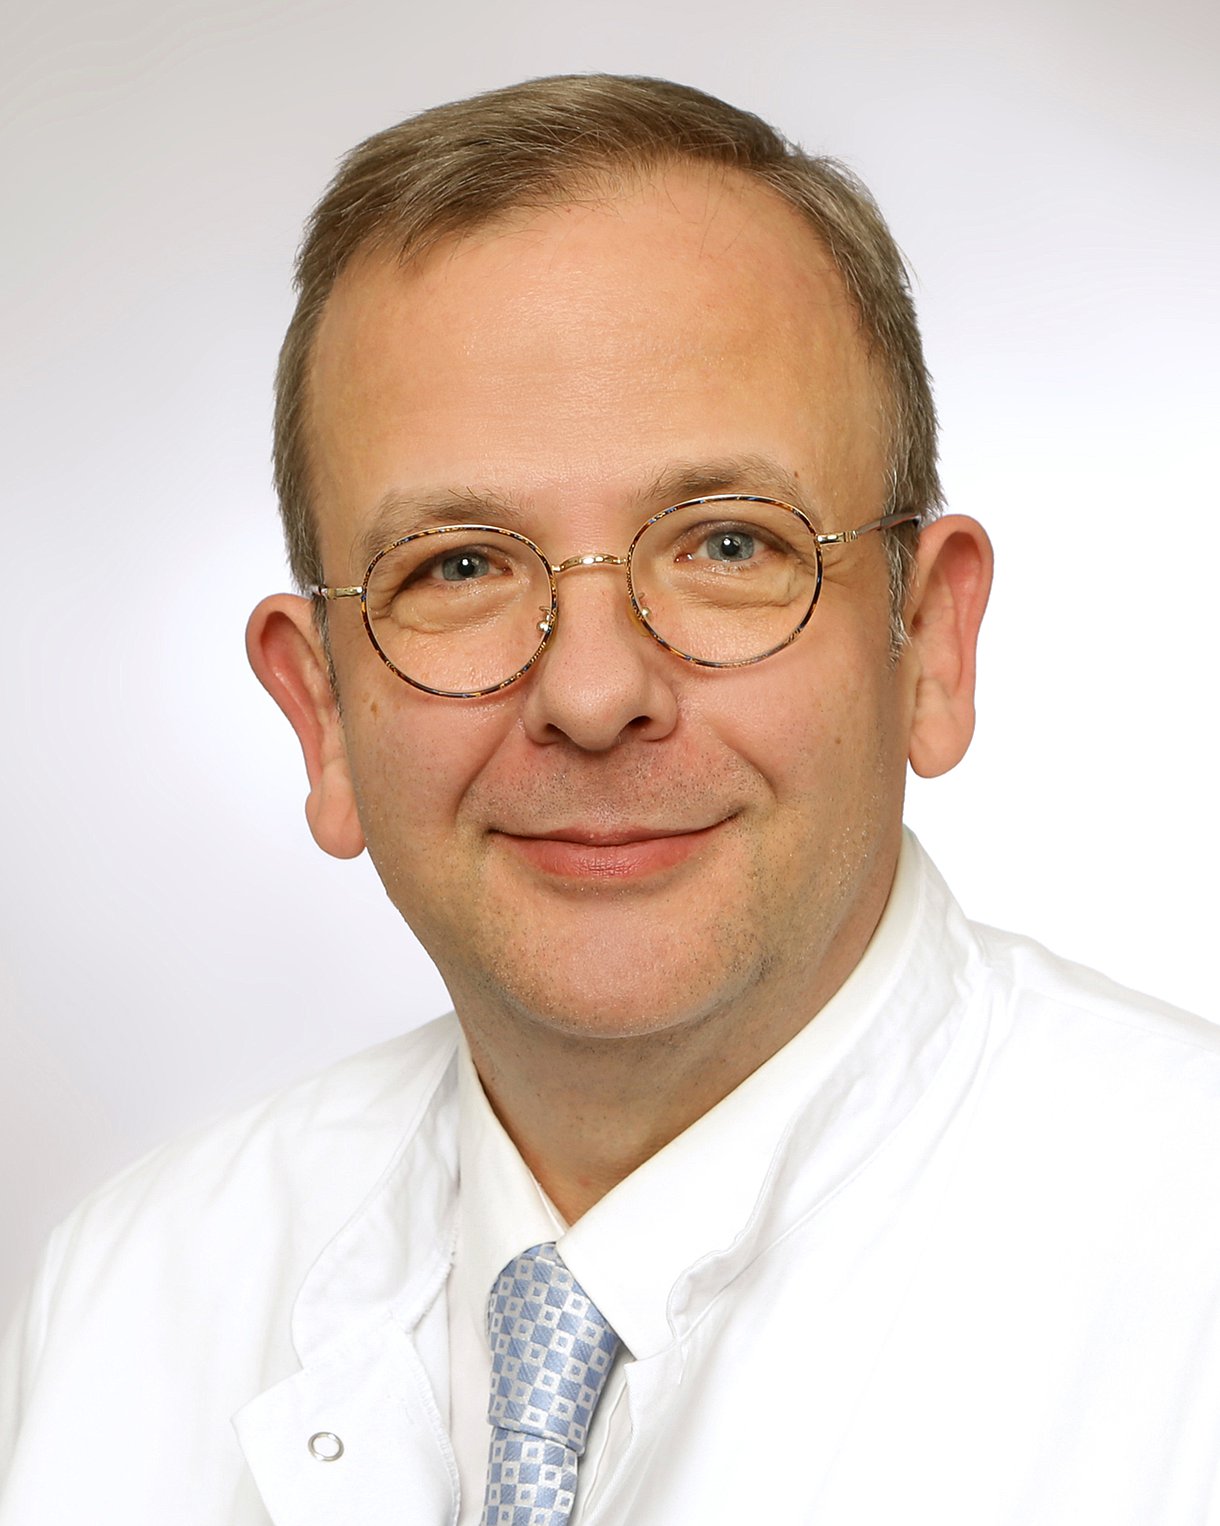 Foto: Porträtbild von Dr. Christian Gogoll, Oberarzt Evang. Lungenklinik Berlin & Co-Autor der S1-Leitlinie „Post-Covid/Long-Covid“